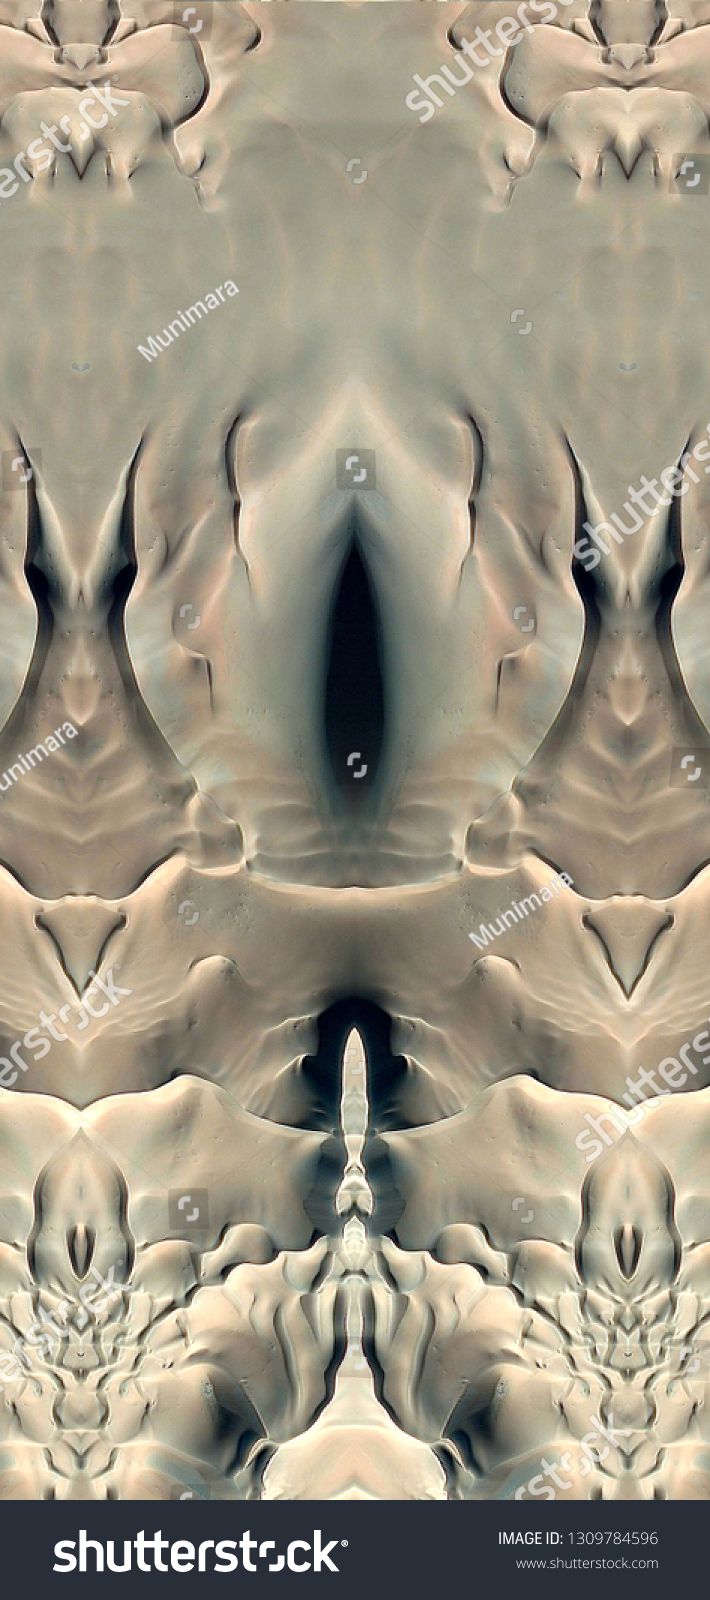 Sex Pussy Vulva Clitoris Vagina Orgasm Stock Photo